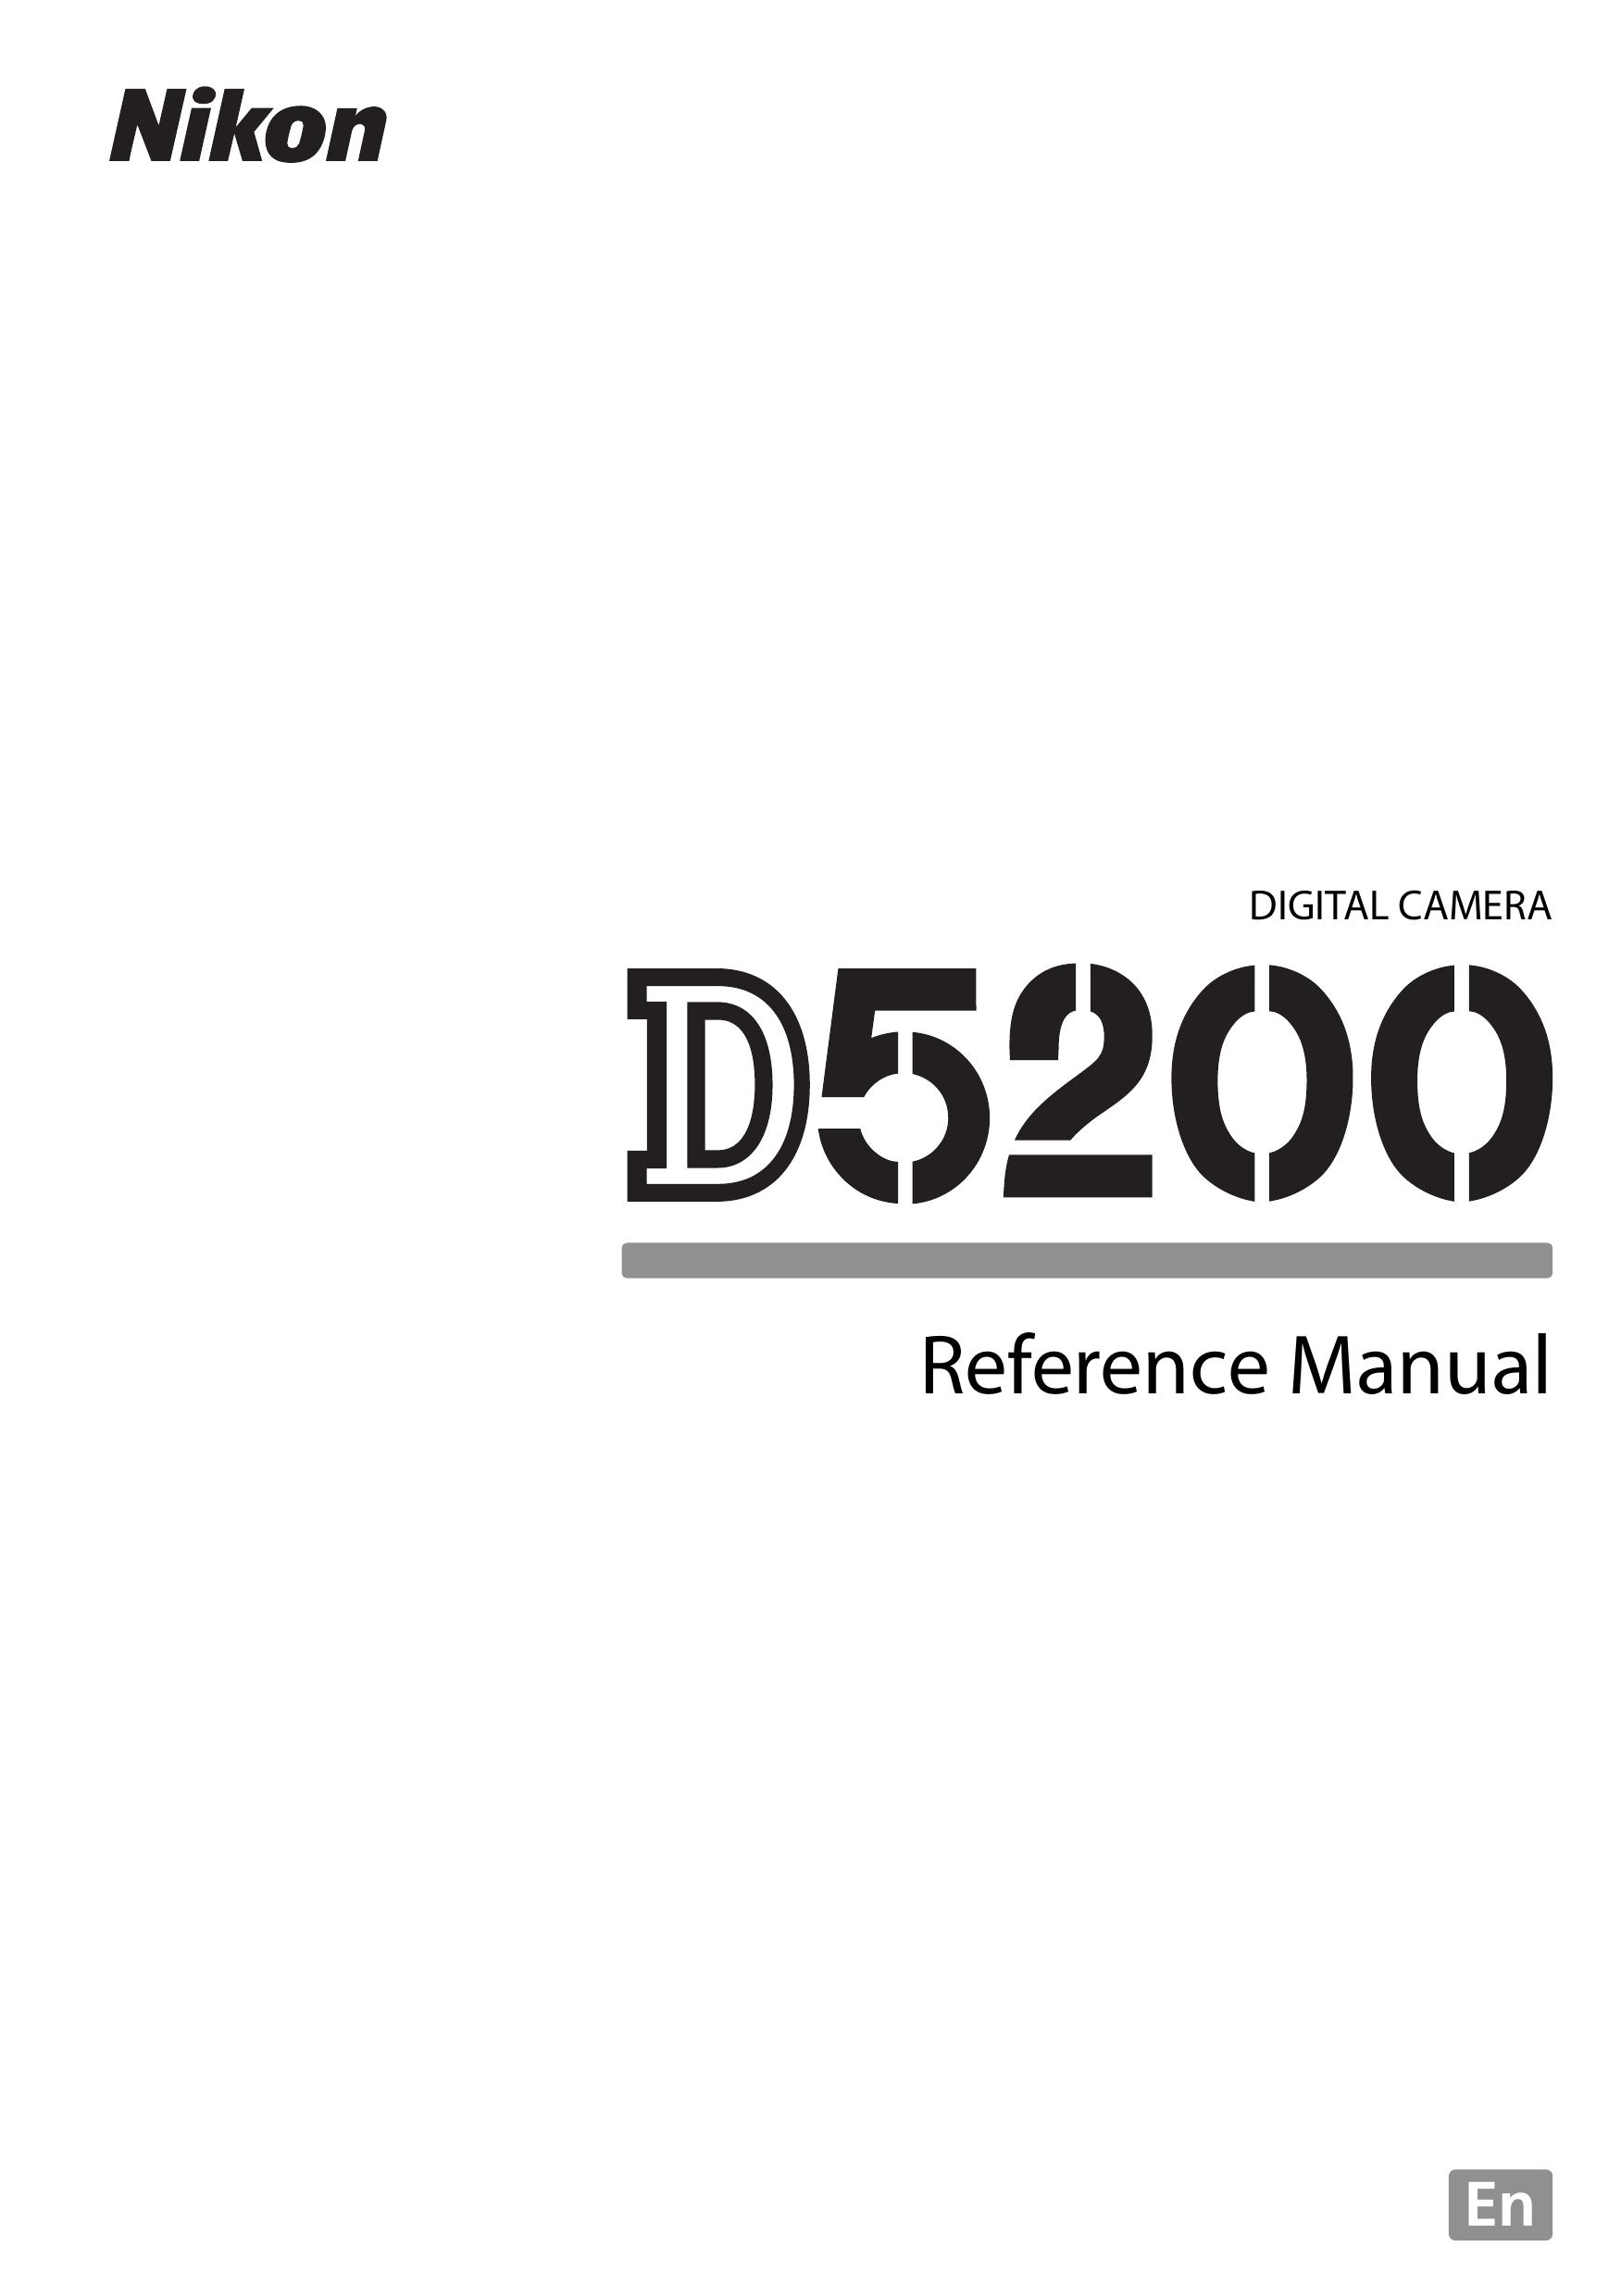 Nikon 13216 Digital Camera User Manual